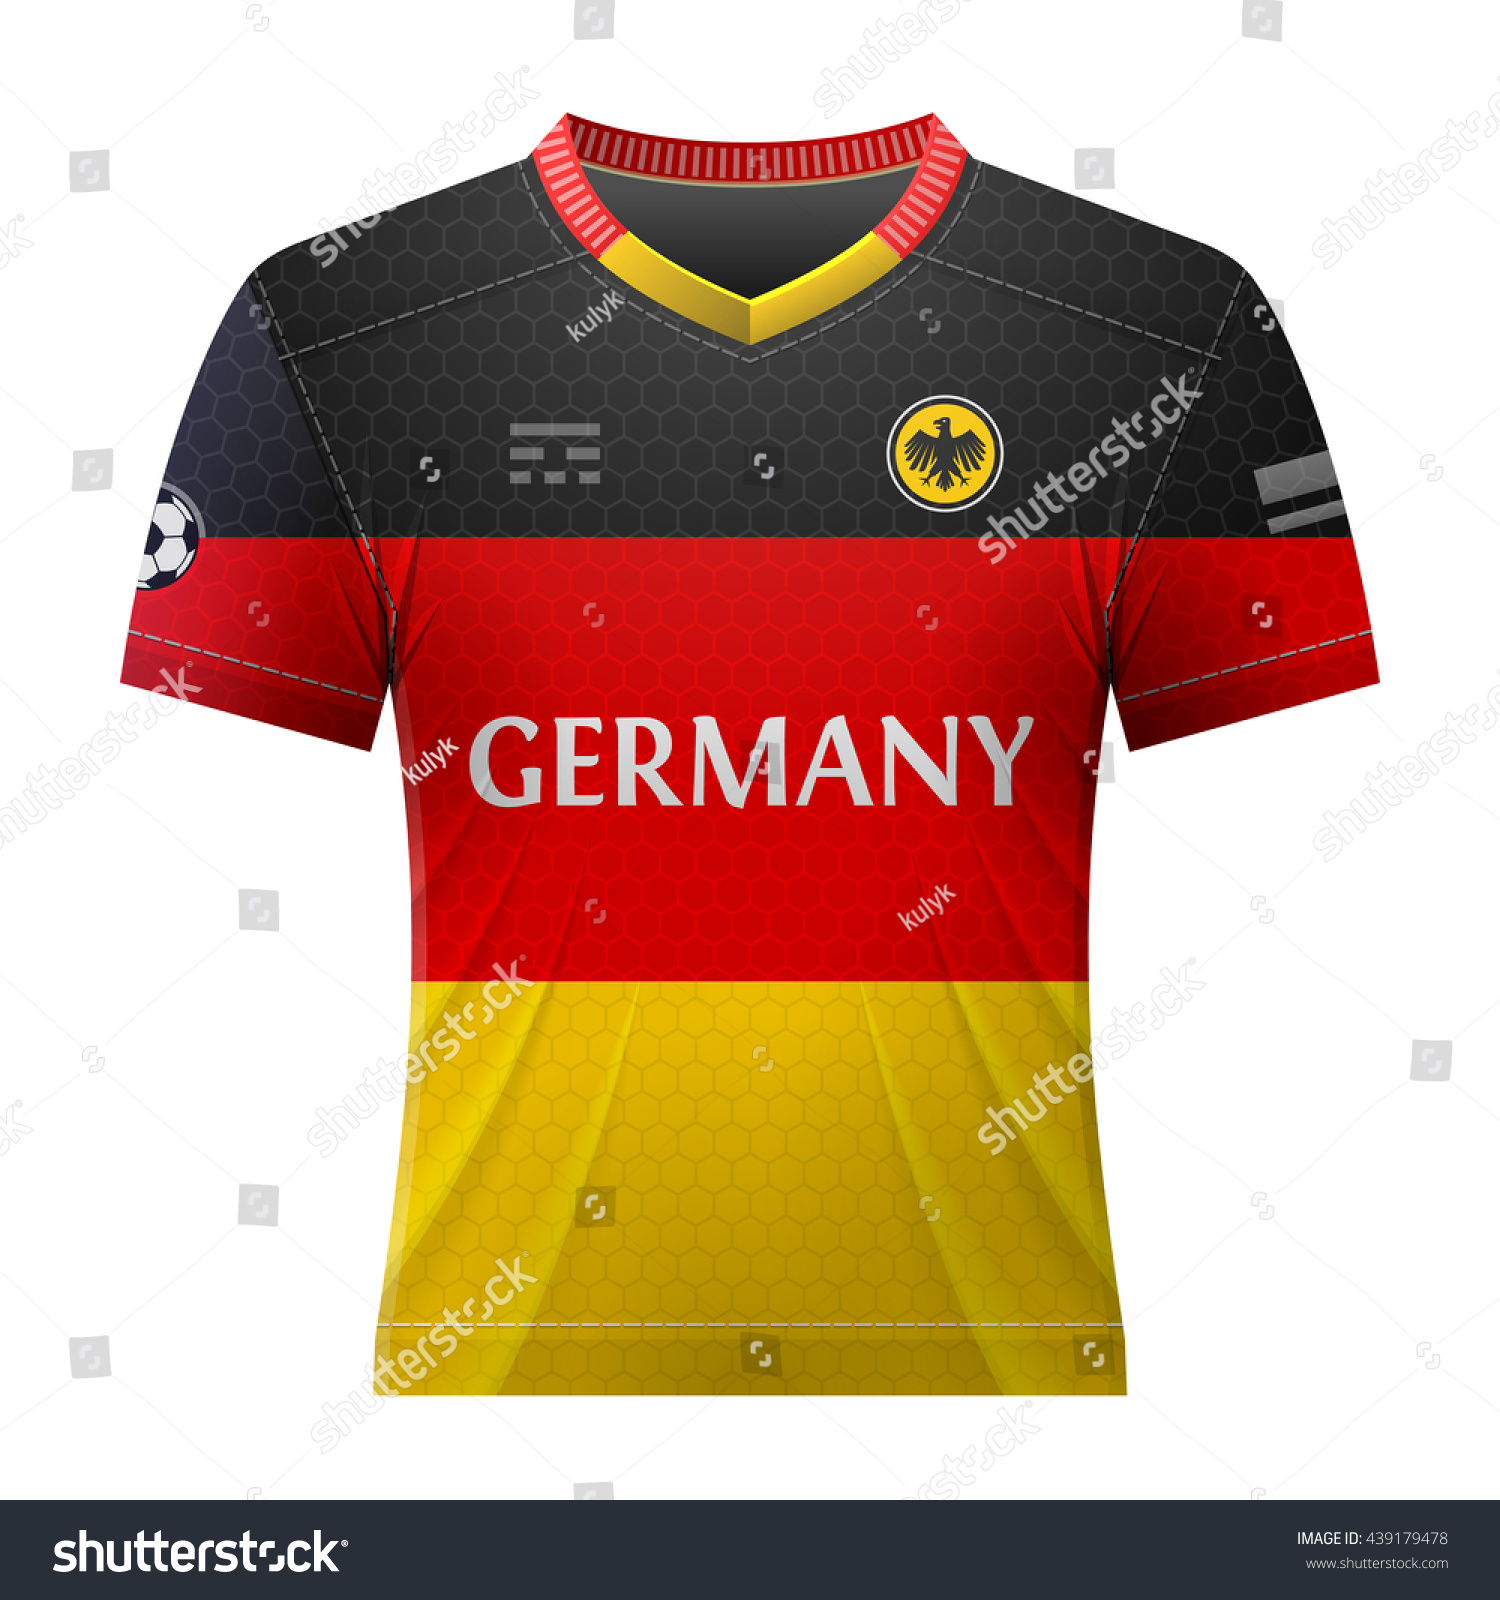 german team jersey